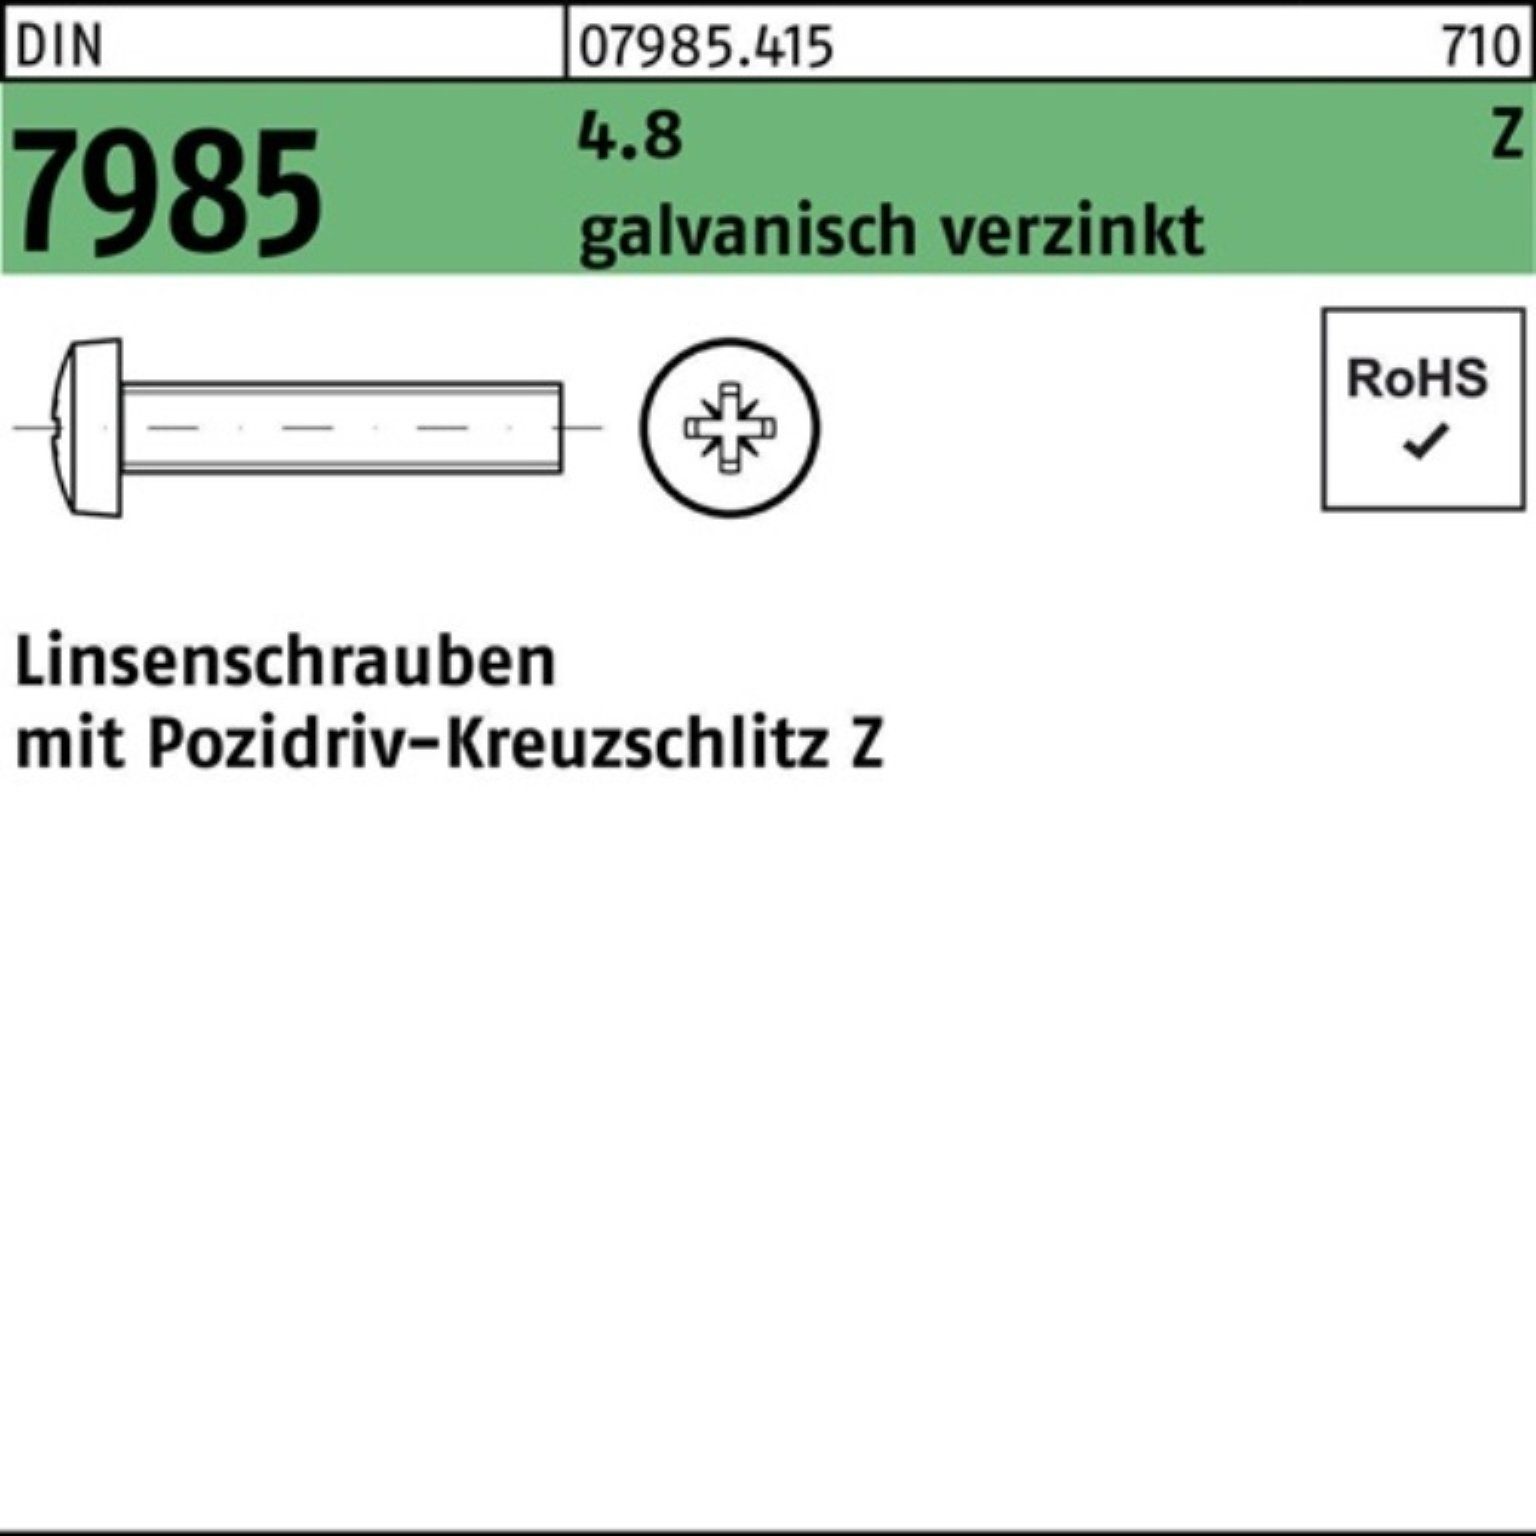 PZ Linsenschraube Reyher DI galv.verz. 4.8 M5x70-Z Linsenschraube DIN Pack 200er 7985 200St.